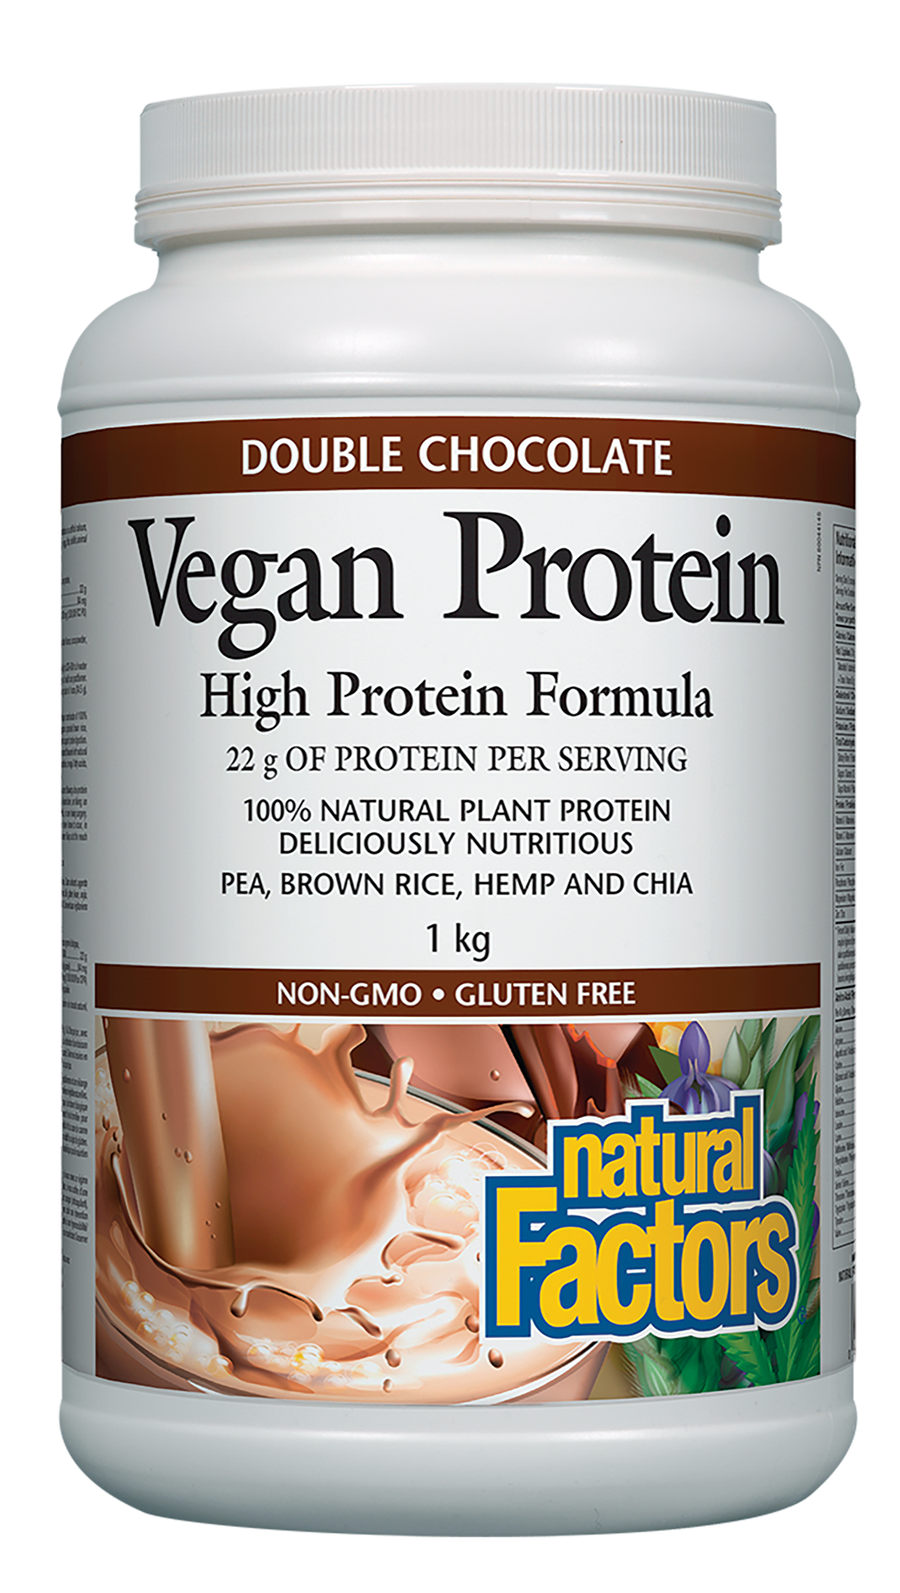 Natural Factors Vegan Protein, Double Chocolate 1 kg Powder